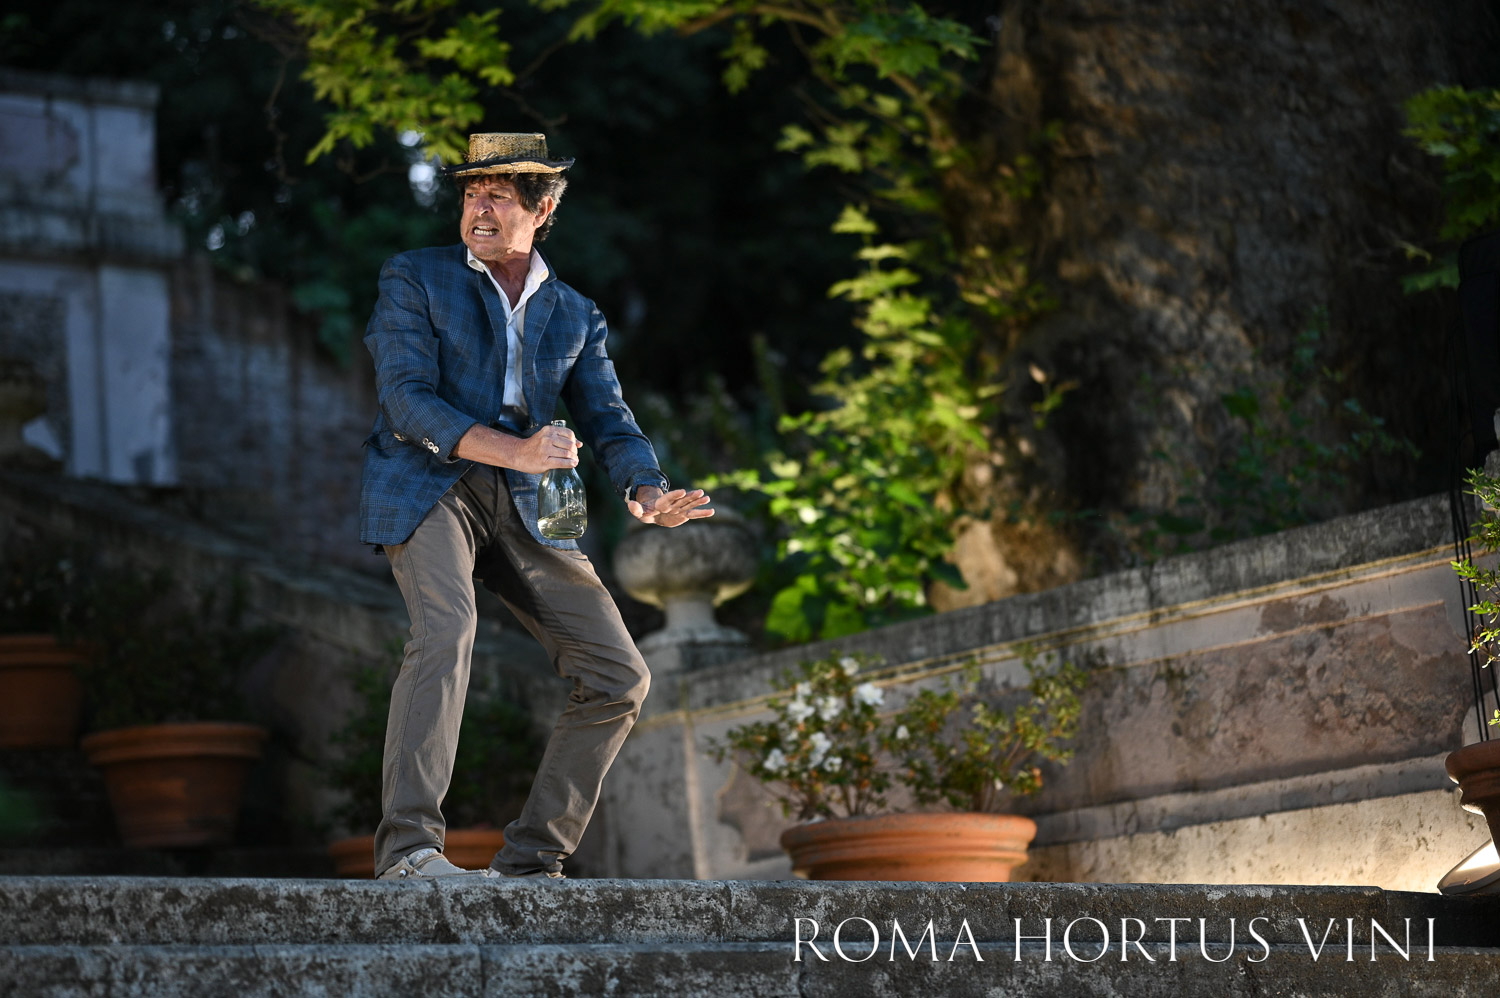 Roma-Hortus-Vini-2021 michele la ginestra